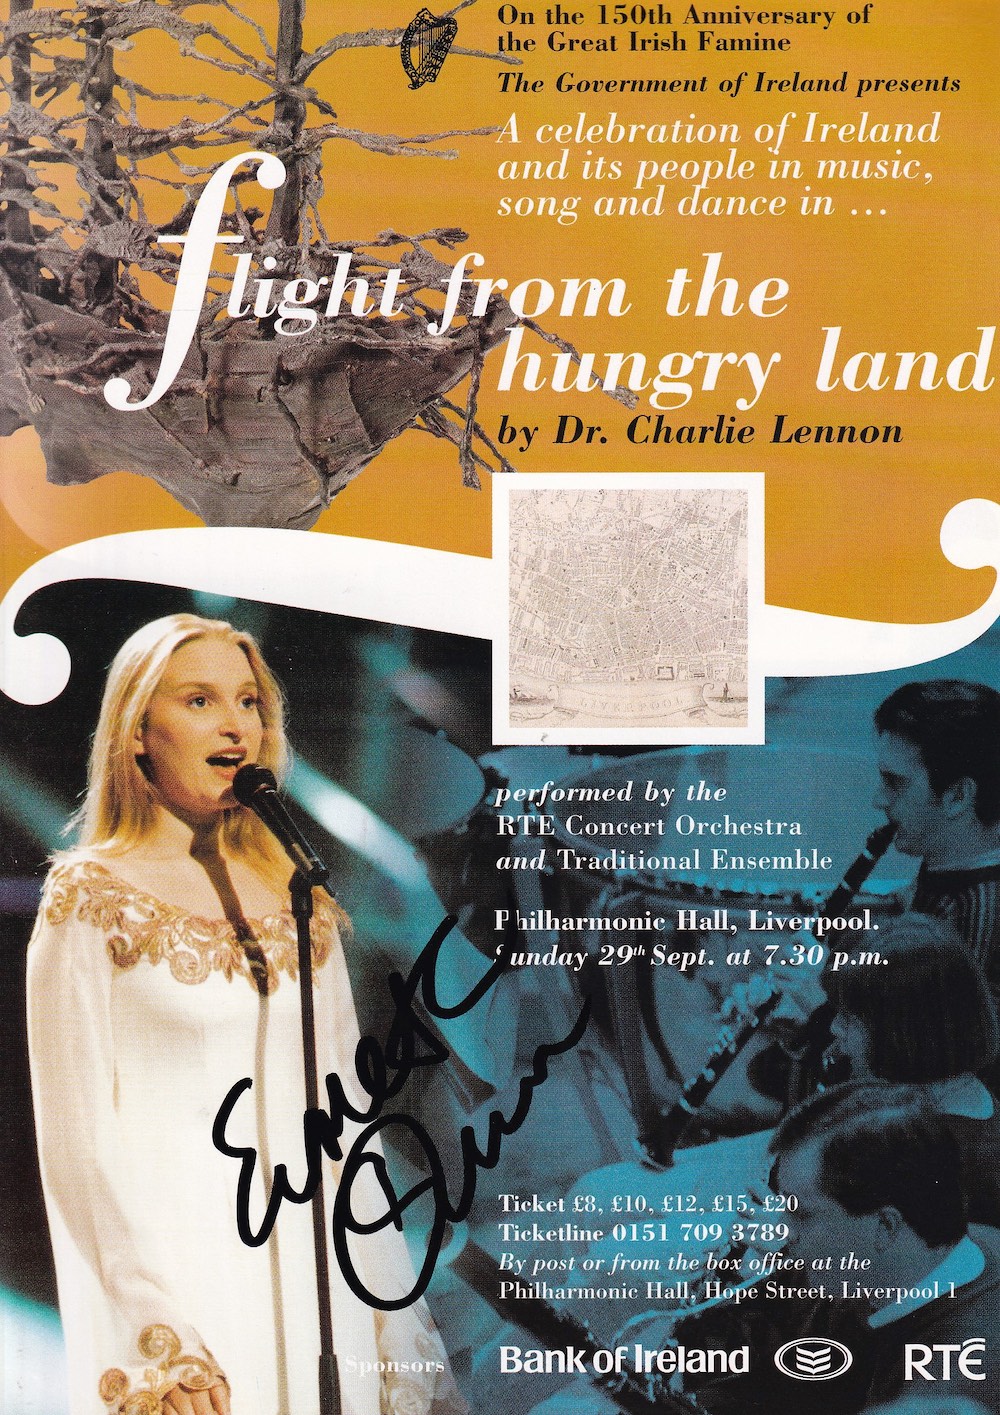 Eimear Quinn Eurovision Song Contest Winner Signed Concert Flyer. Good Condition. All autographs